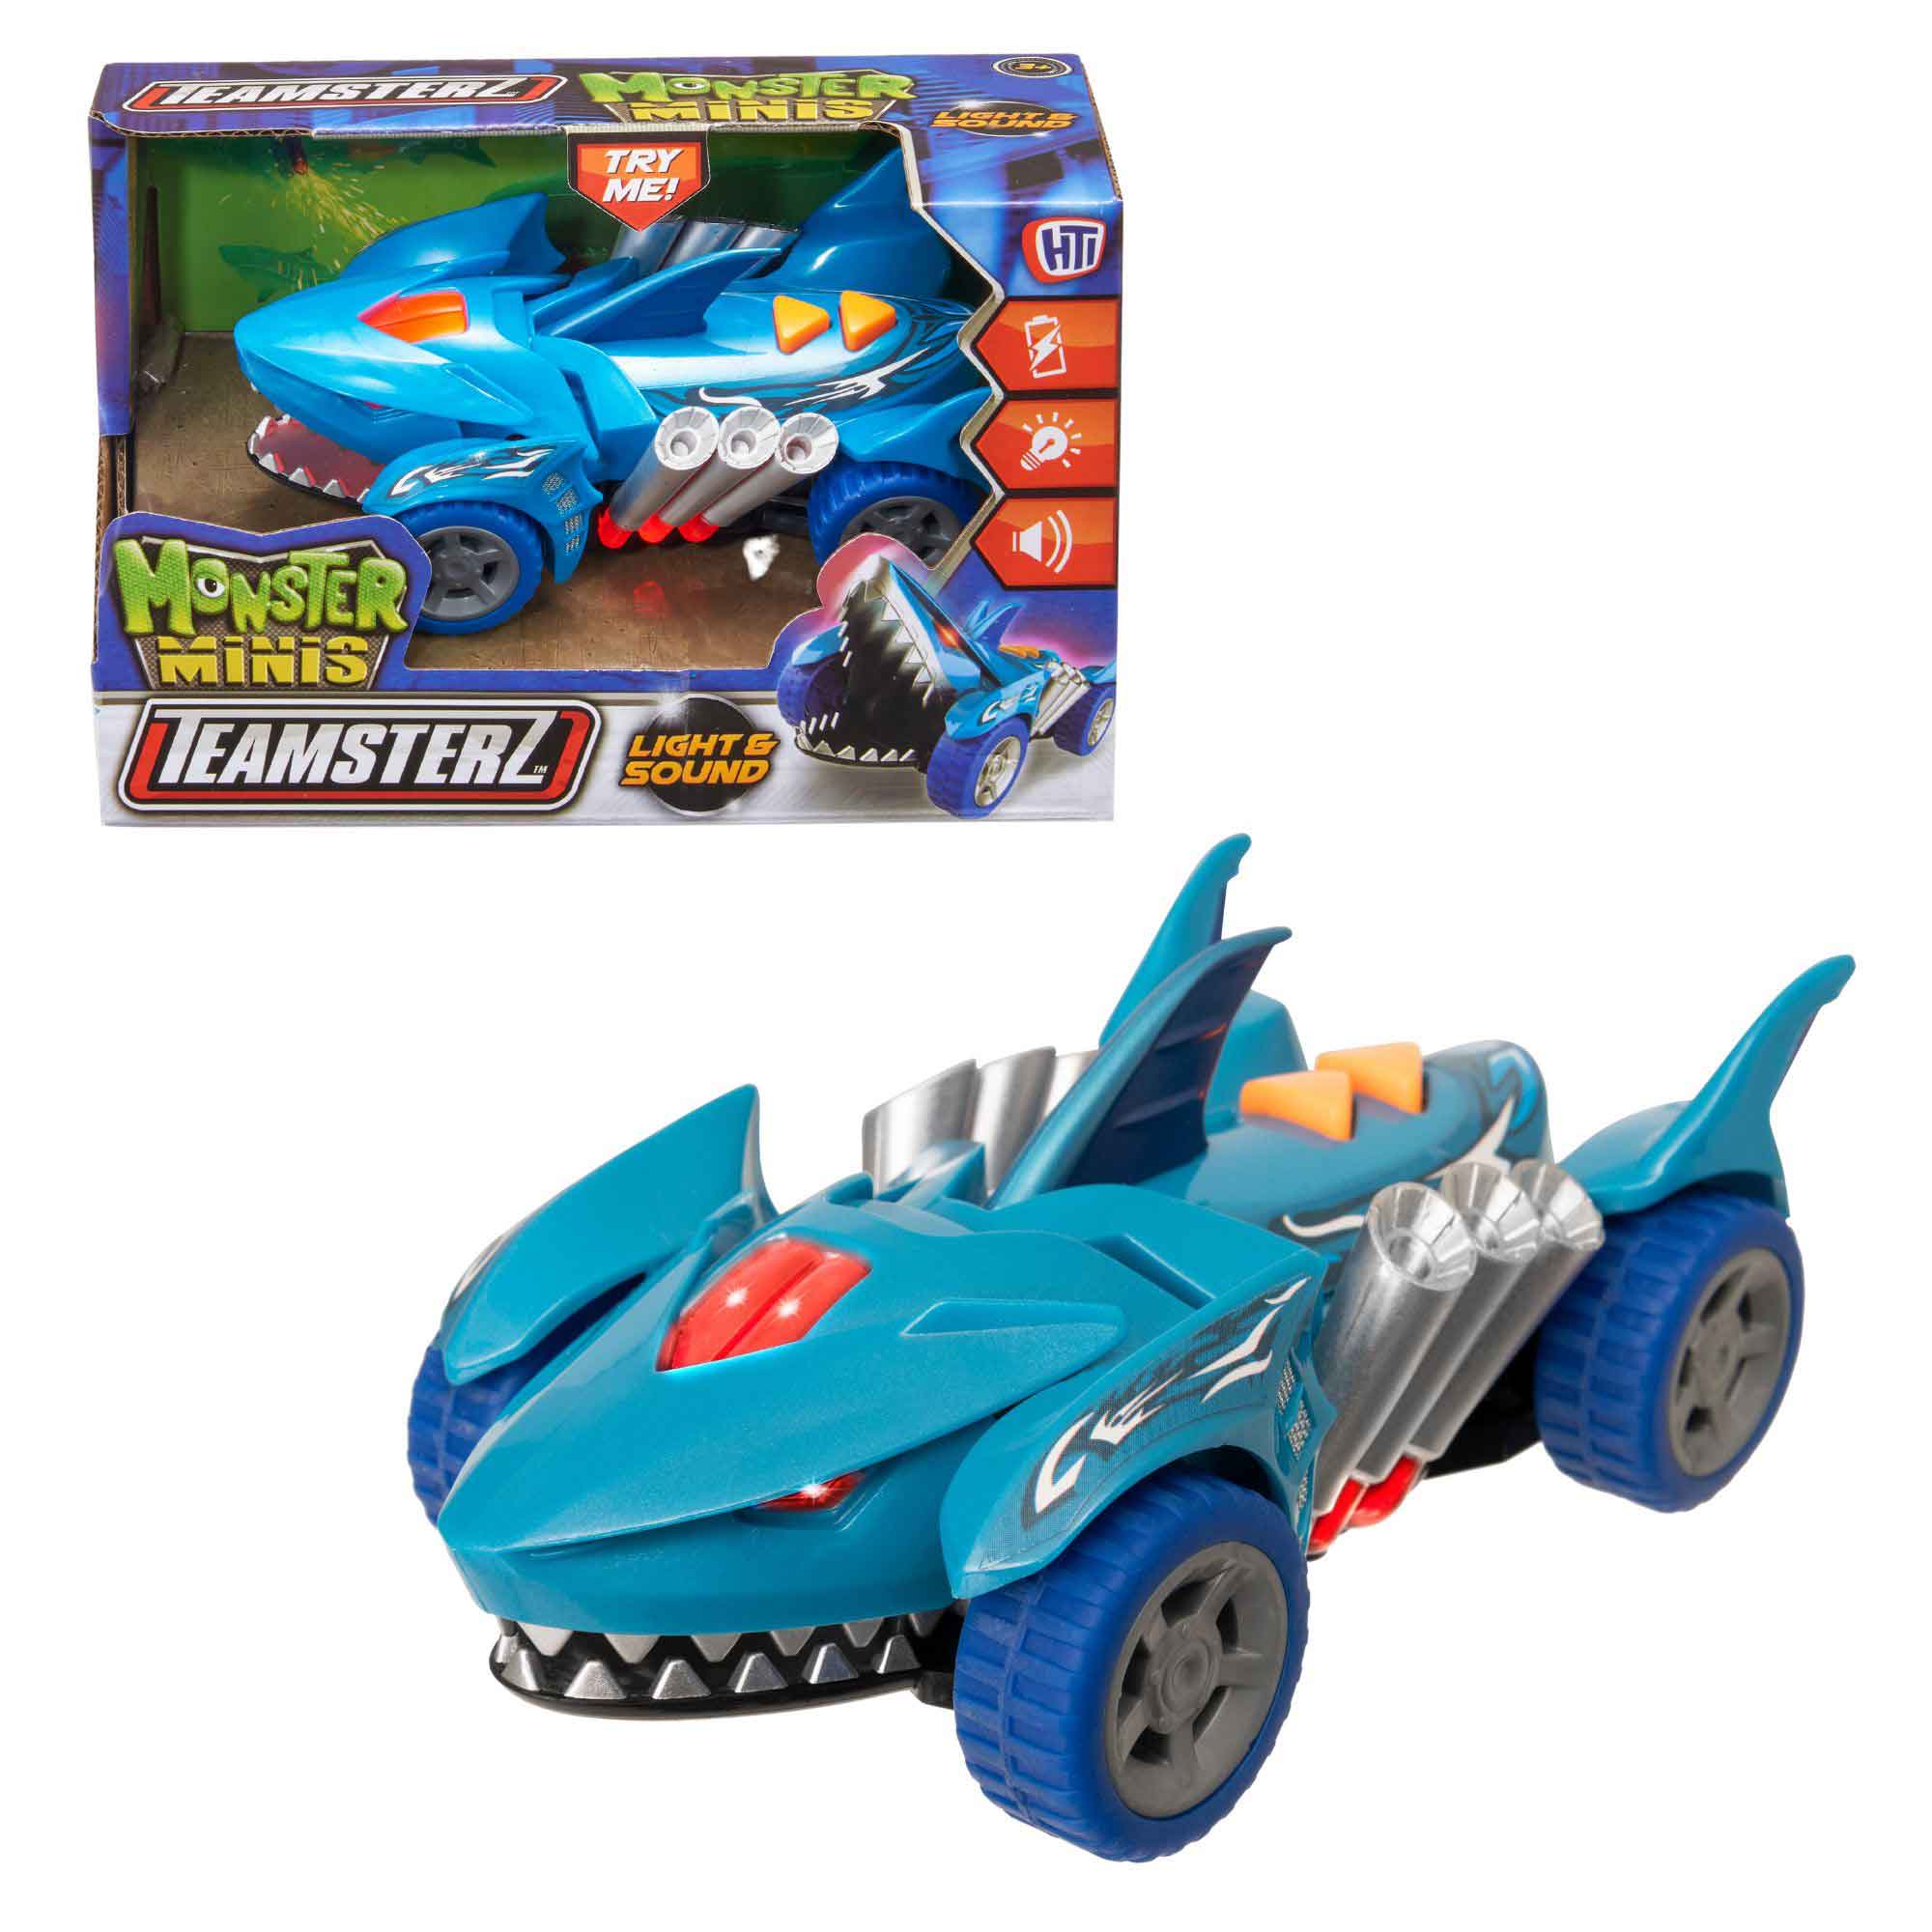 Teamsterz Monster Mini Light & Sound Shark Car